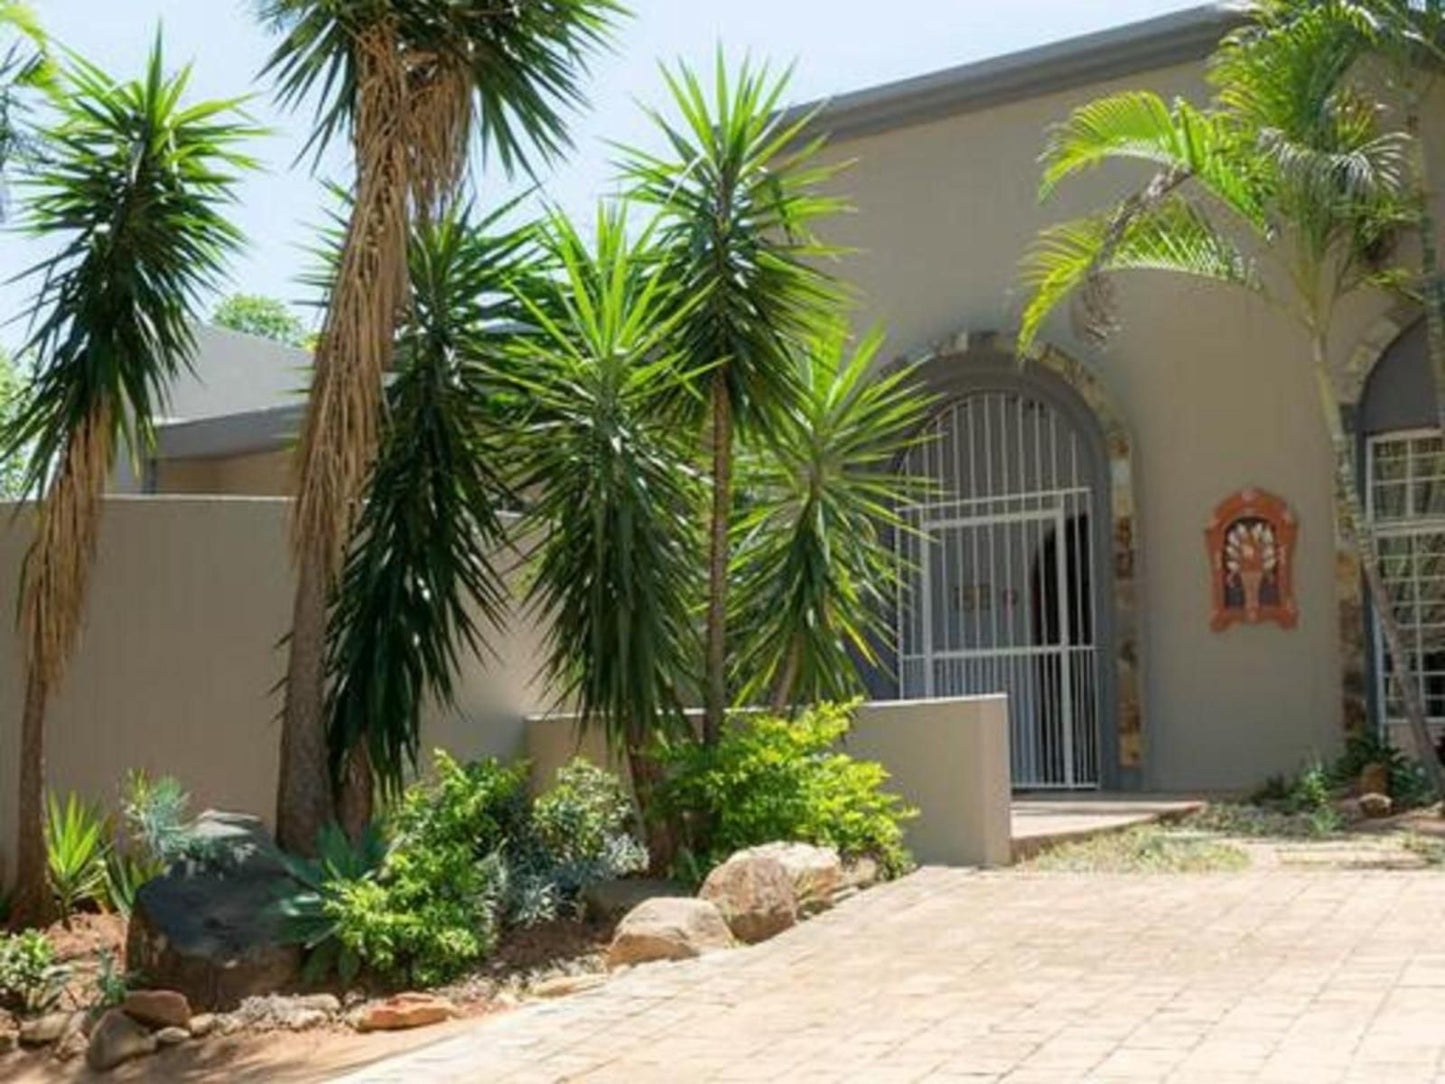 Barbertonbnb Barberton Mpumalanga South Africa House, Building, Architecture, Palm Tree, Plant, Nature, Wood, Garden